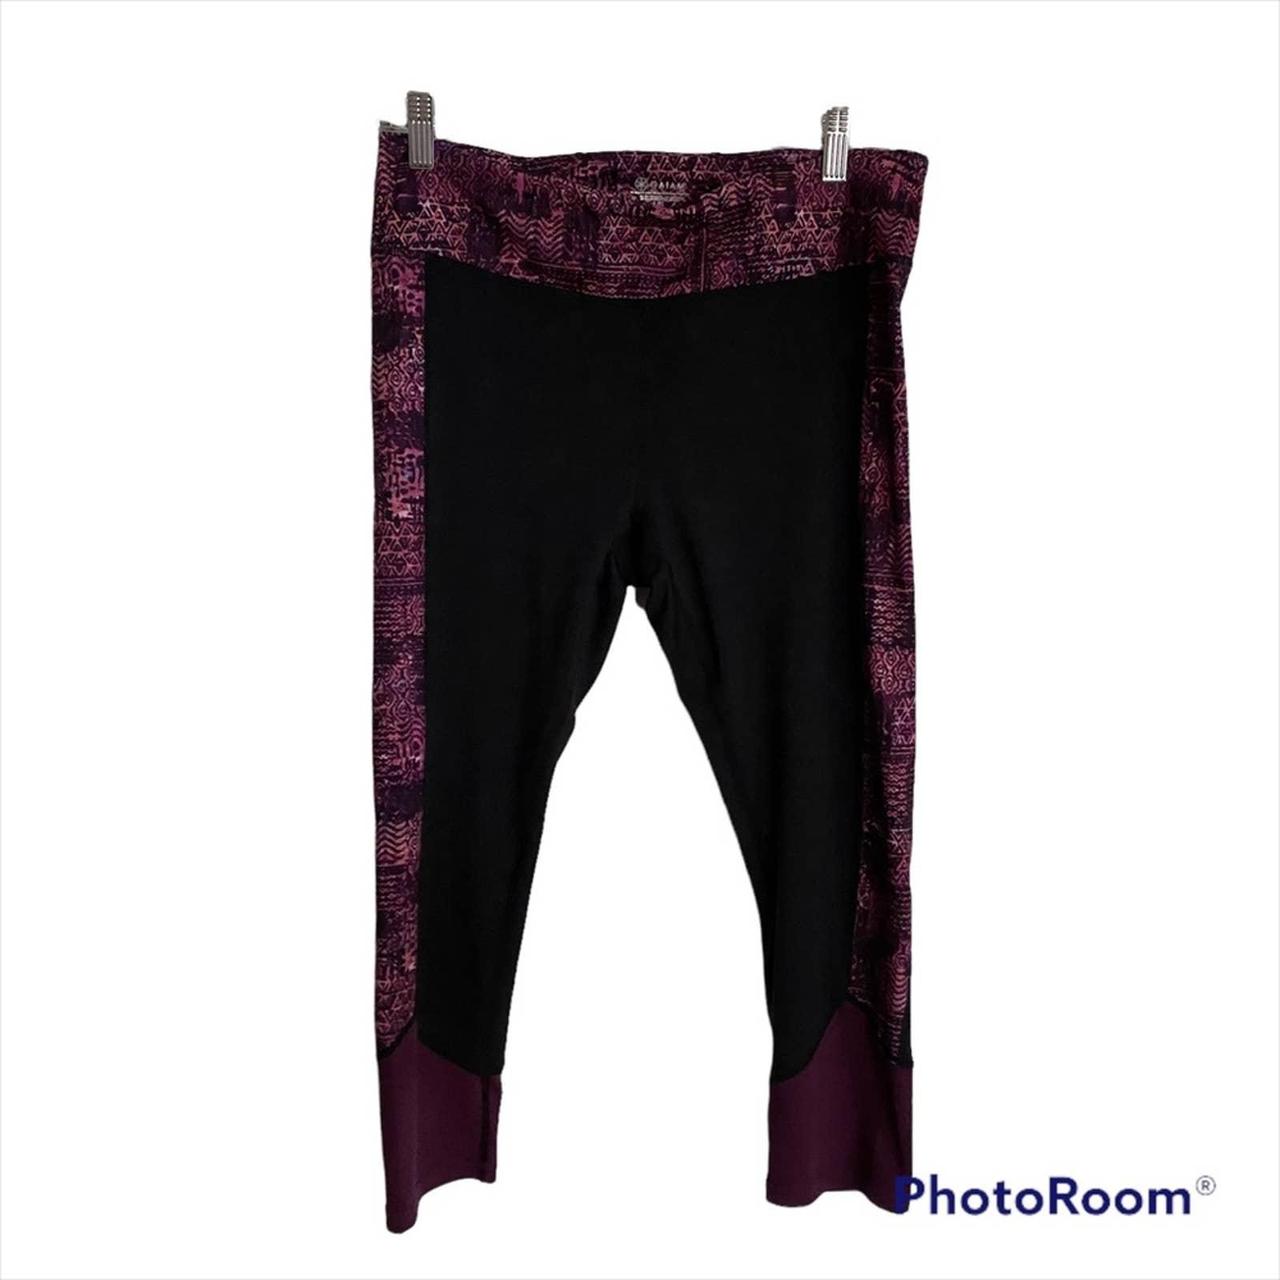 Gaiam black with purple full length leggings size M